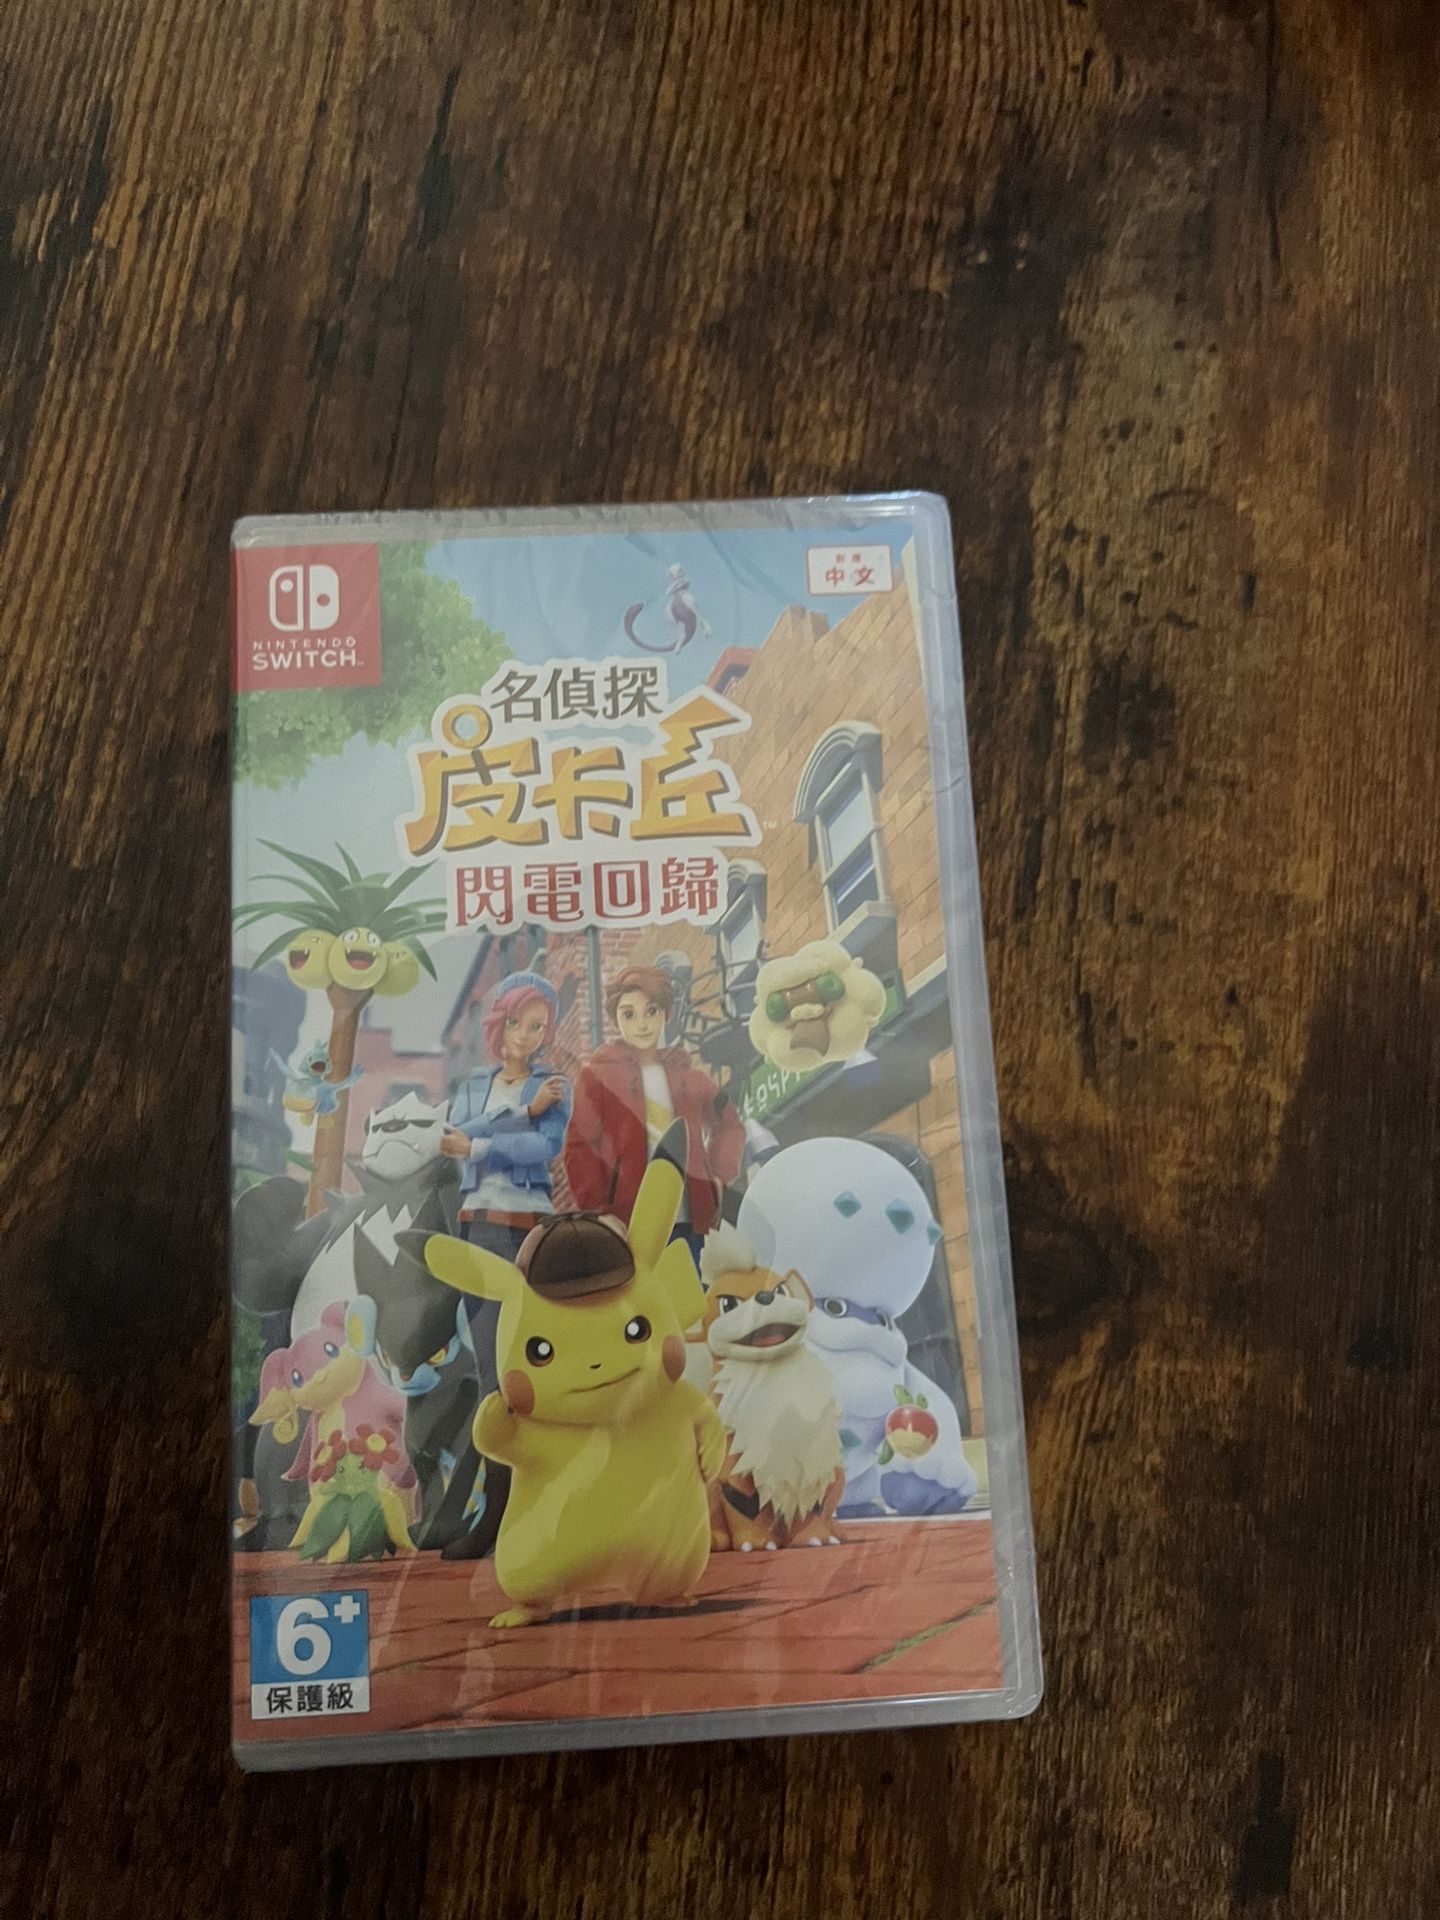 Detective Pikachu Returns Nintendo Switch Game